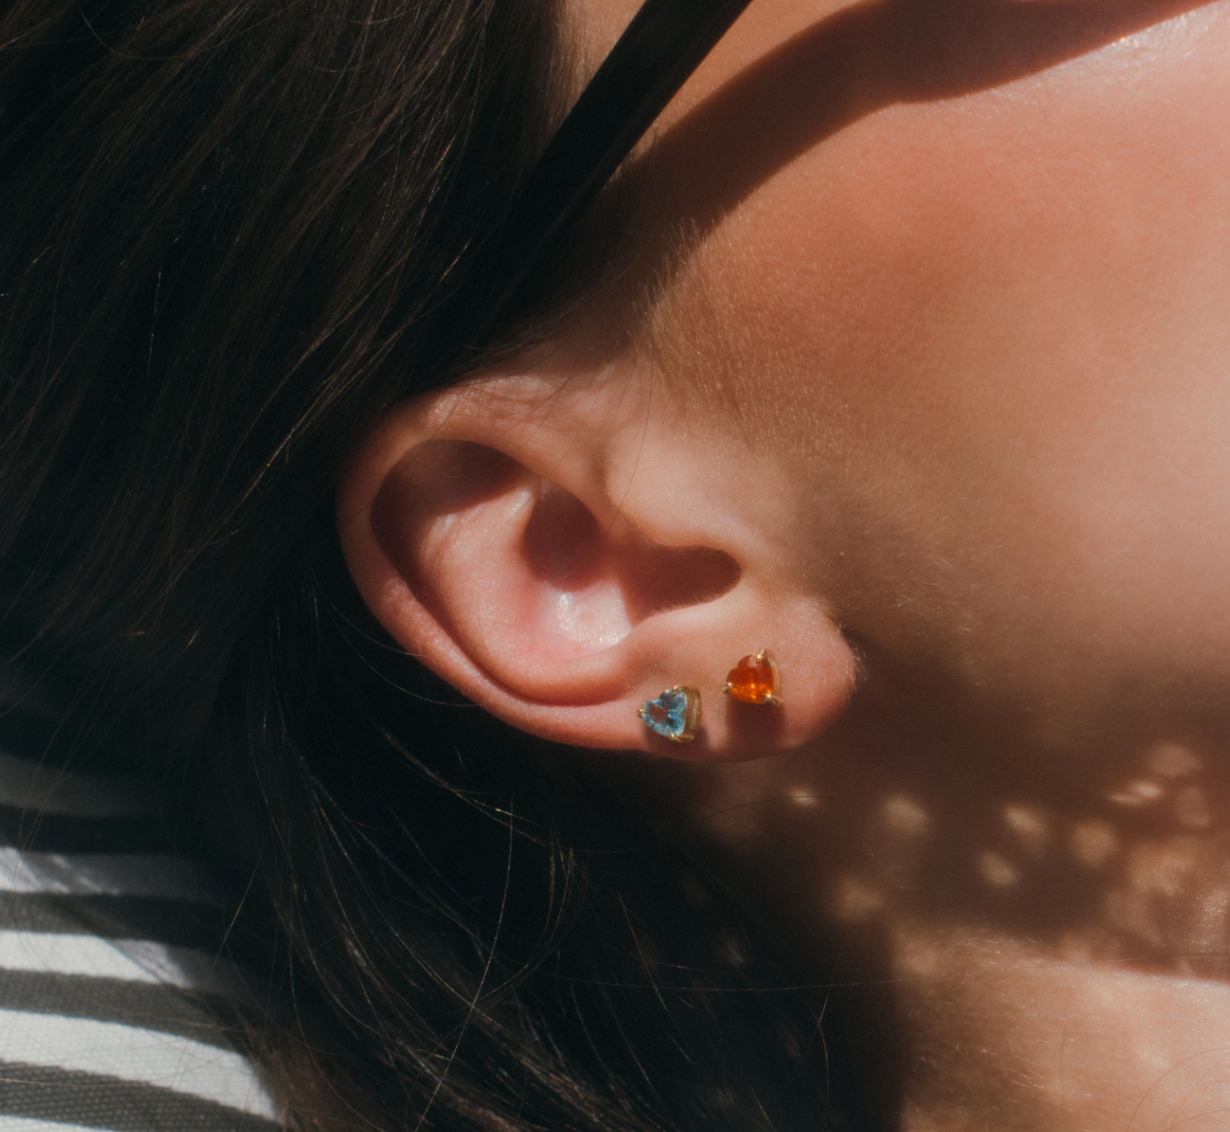 Rainbow heart stud earrings